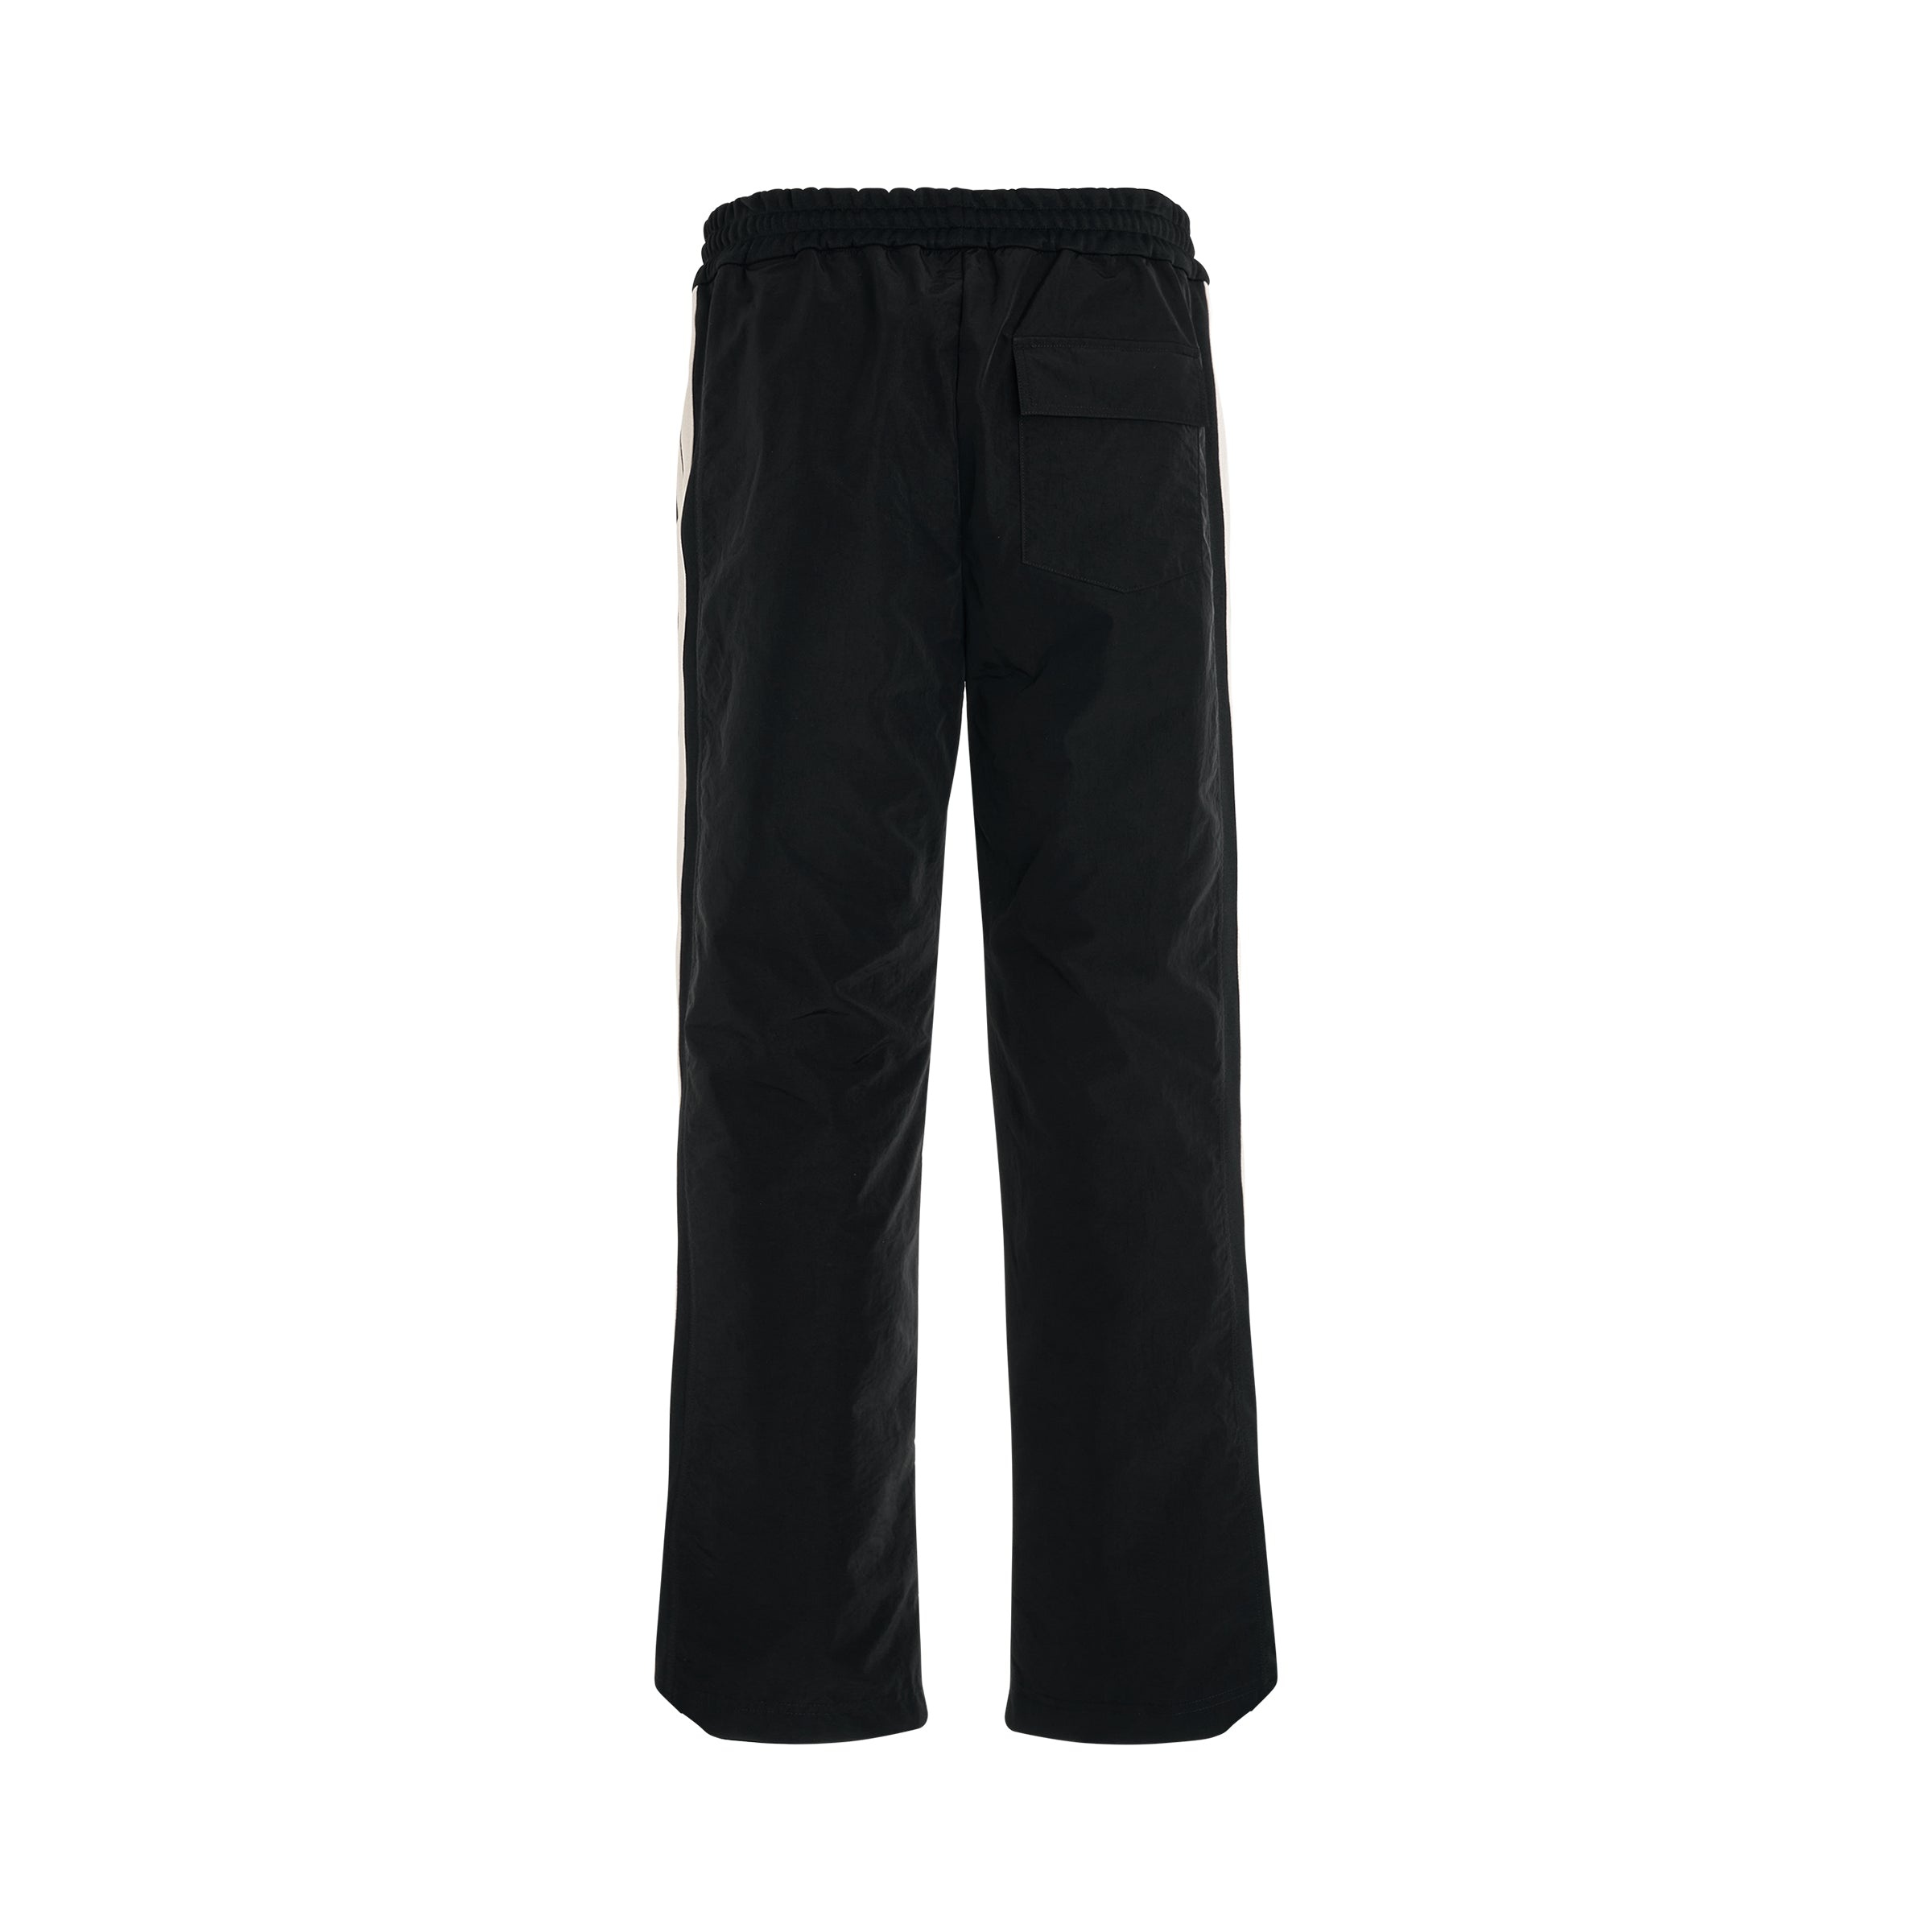 Monogram Nylon Track Pants in Black/Off White - 4